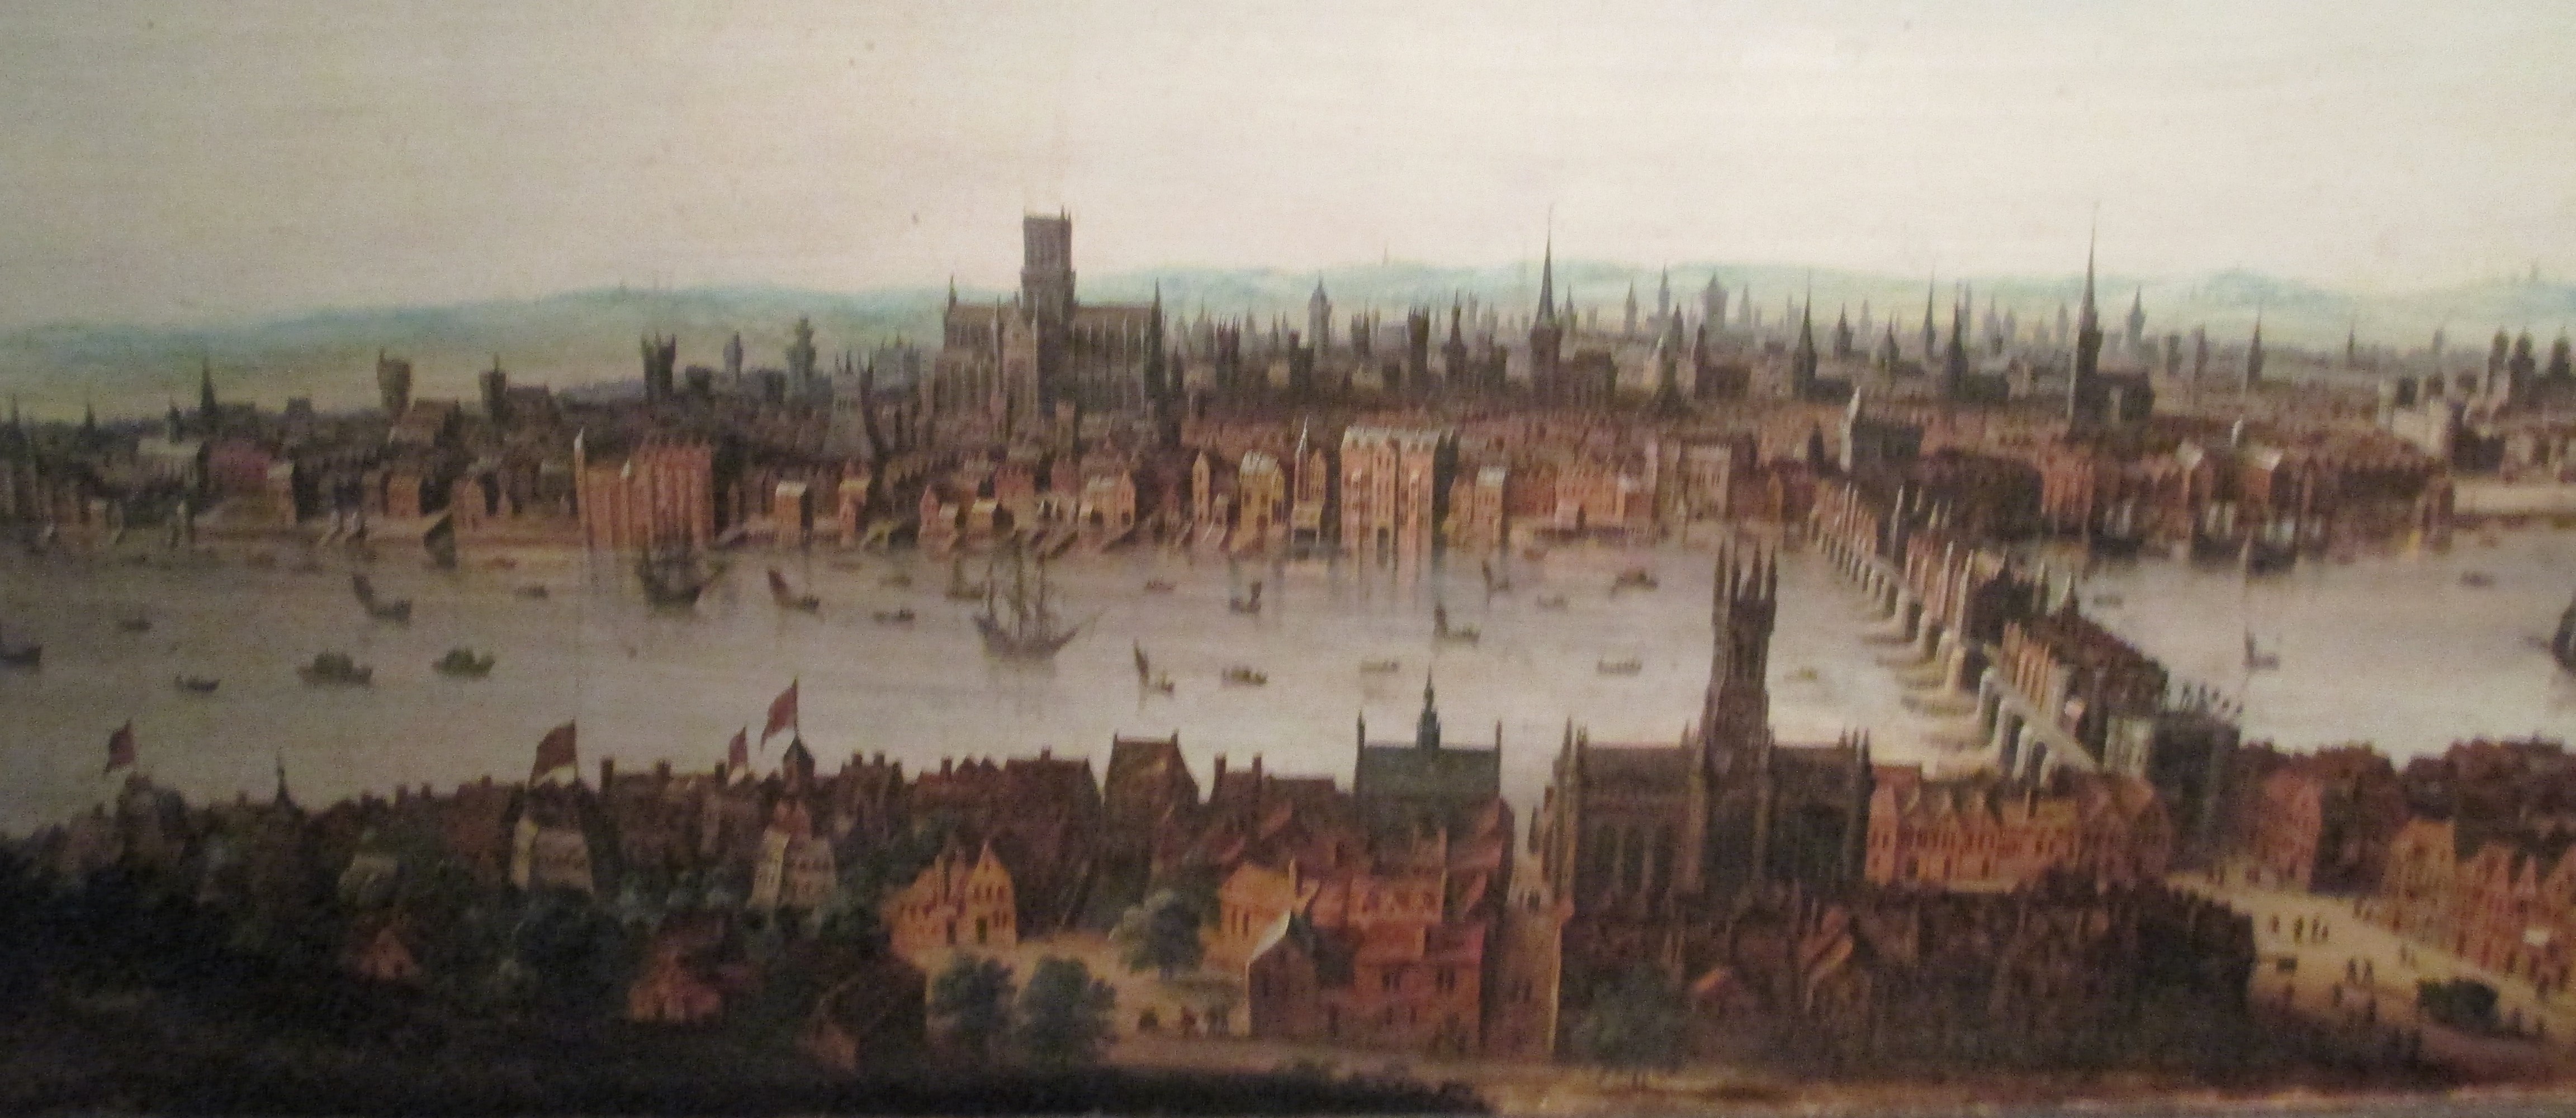 Англия начала 17 века. Лондон 16 века. Лондон 11 века. Англия в 16 веке Лондон. Вестминстер Лондон 17 век.